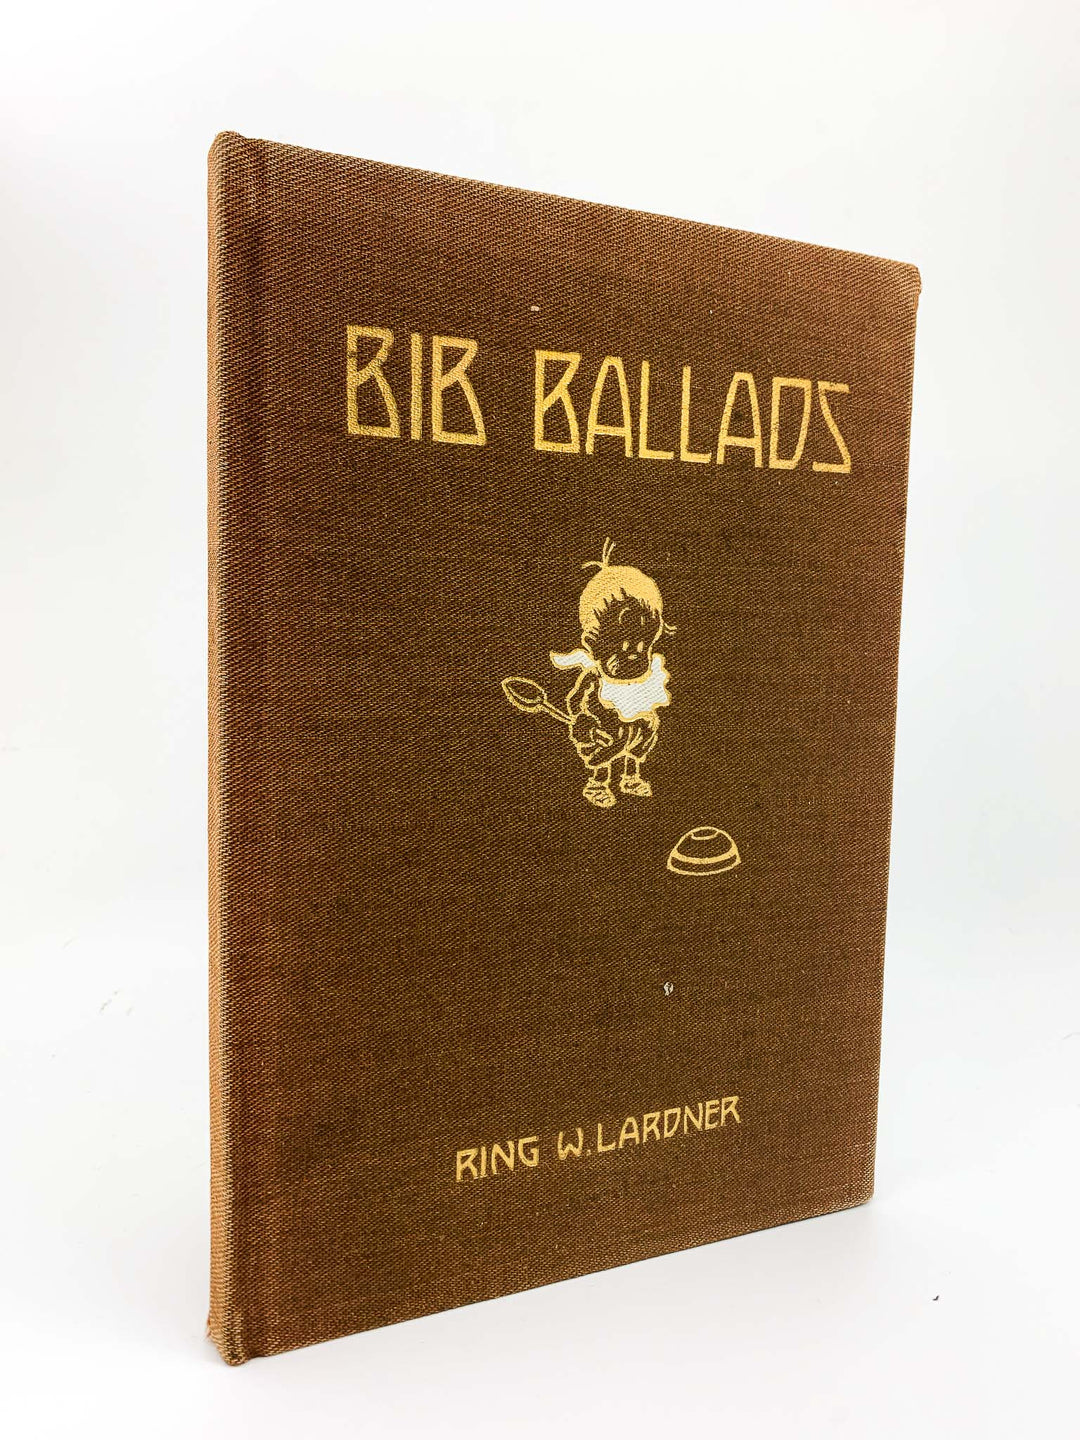 Lardner, Ring W - Bib Ballads | front cover